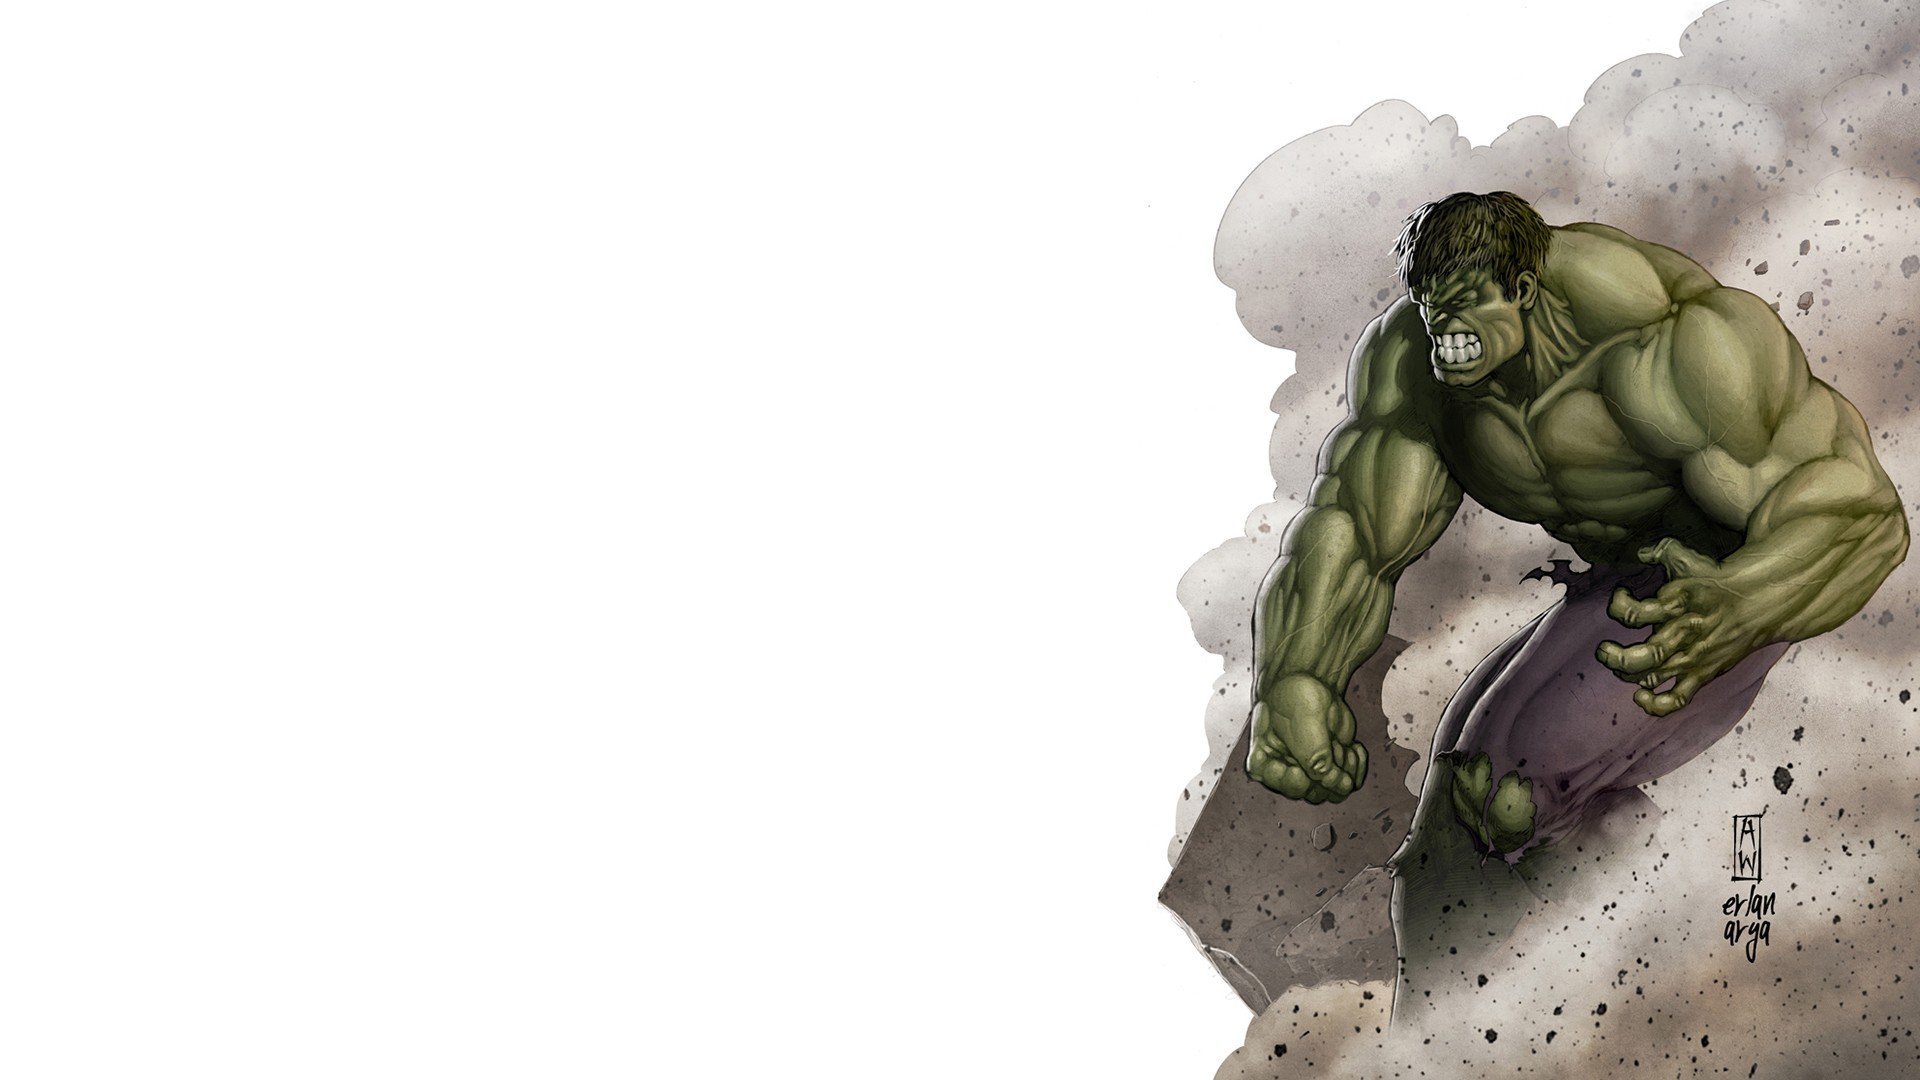 Hulk Wallpaper Image Gallery